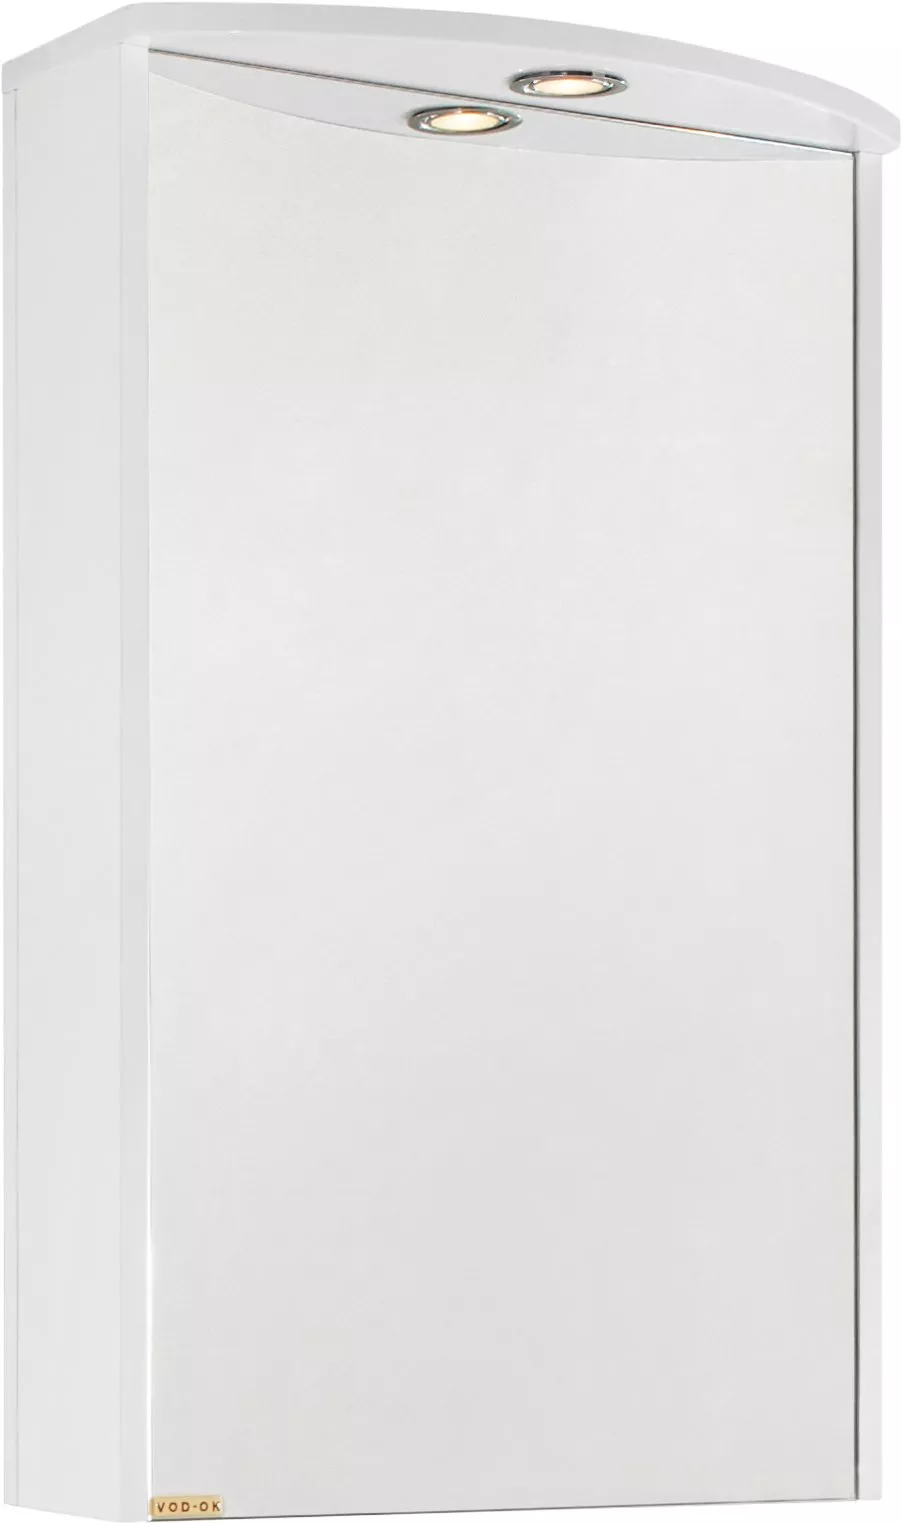 Зеркало-шкаф Vod-Ok Мона 50 R, белый, размер 50 00002418 - фото 1